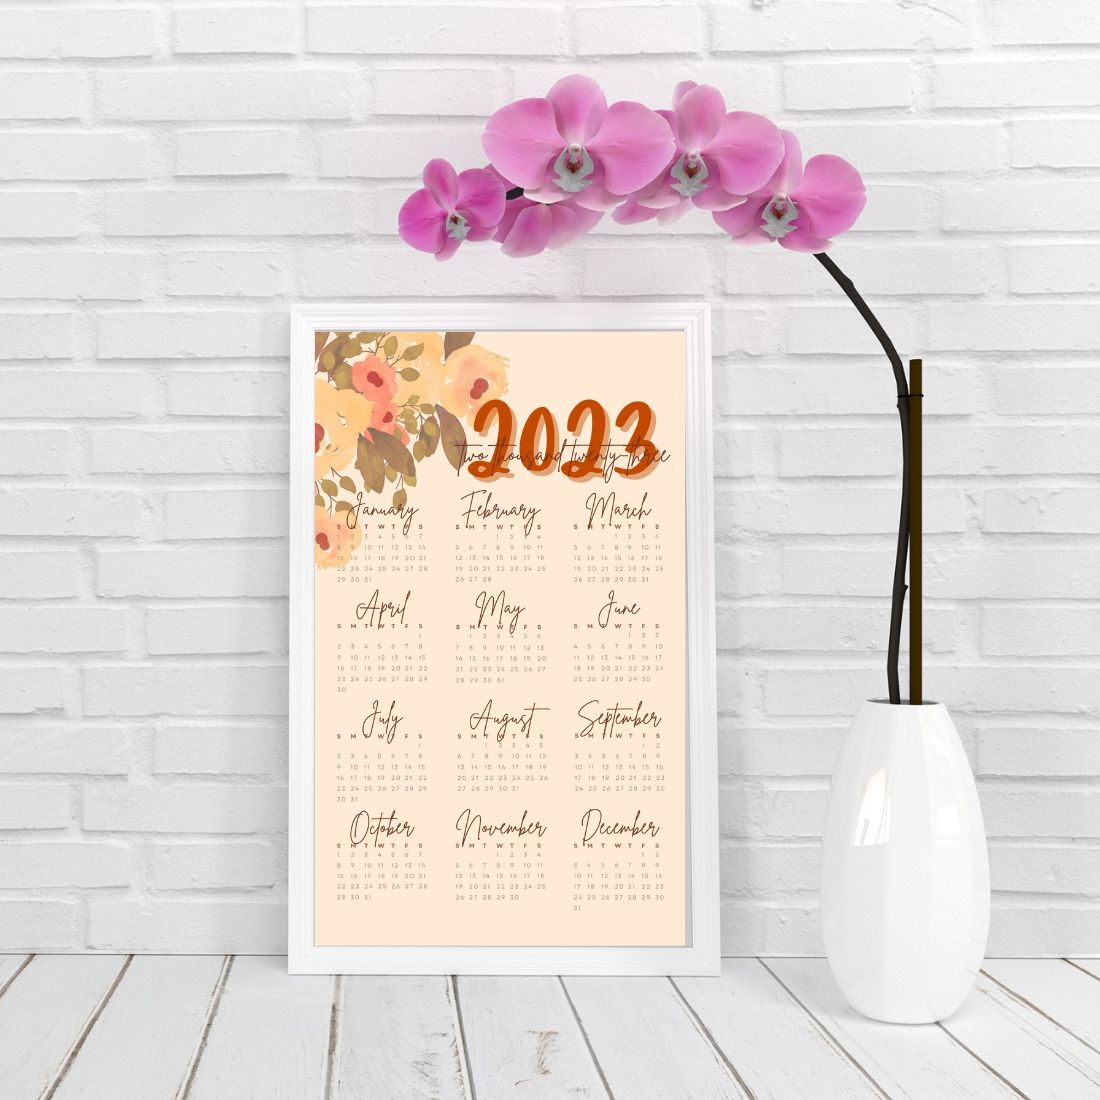 2023 Autumn Theme Wall Calendar cover image.